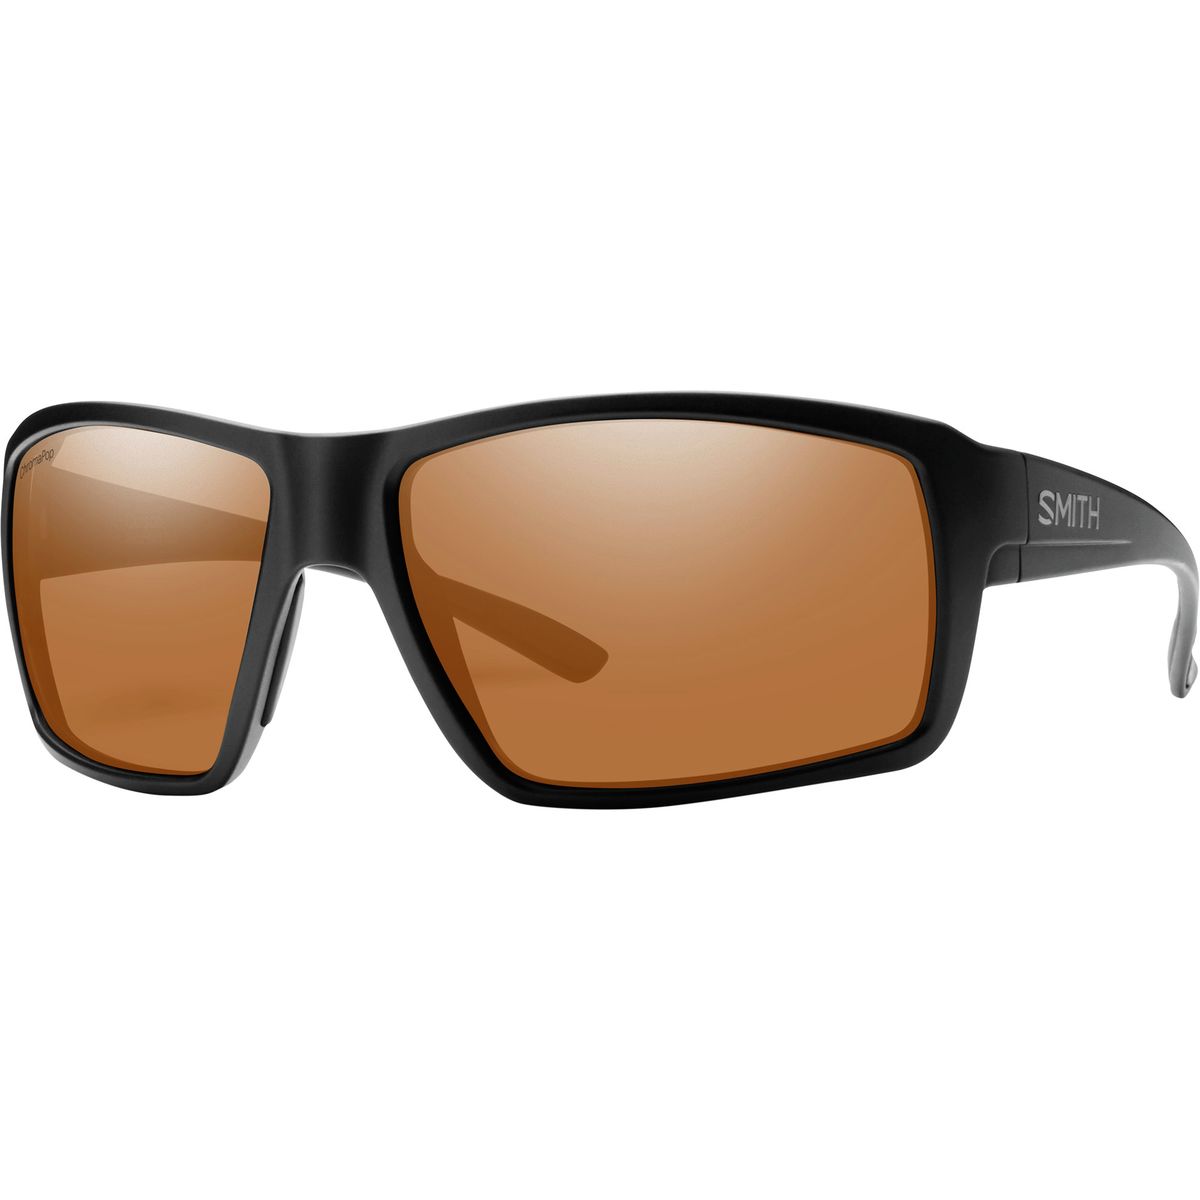 Smith Colson ChromaPop Polarized Sunglasses - Men's